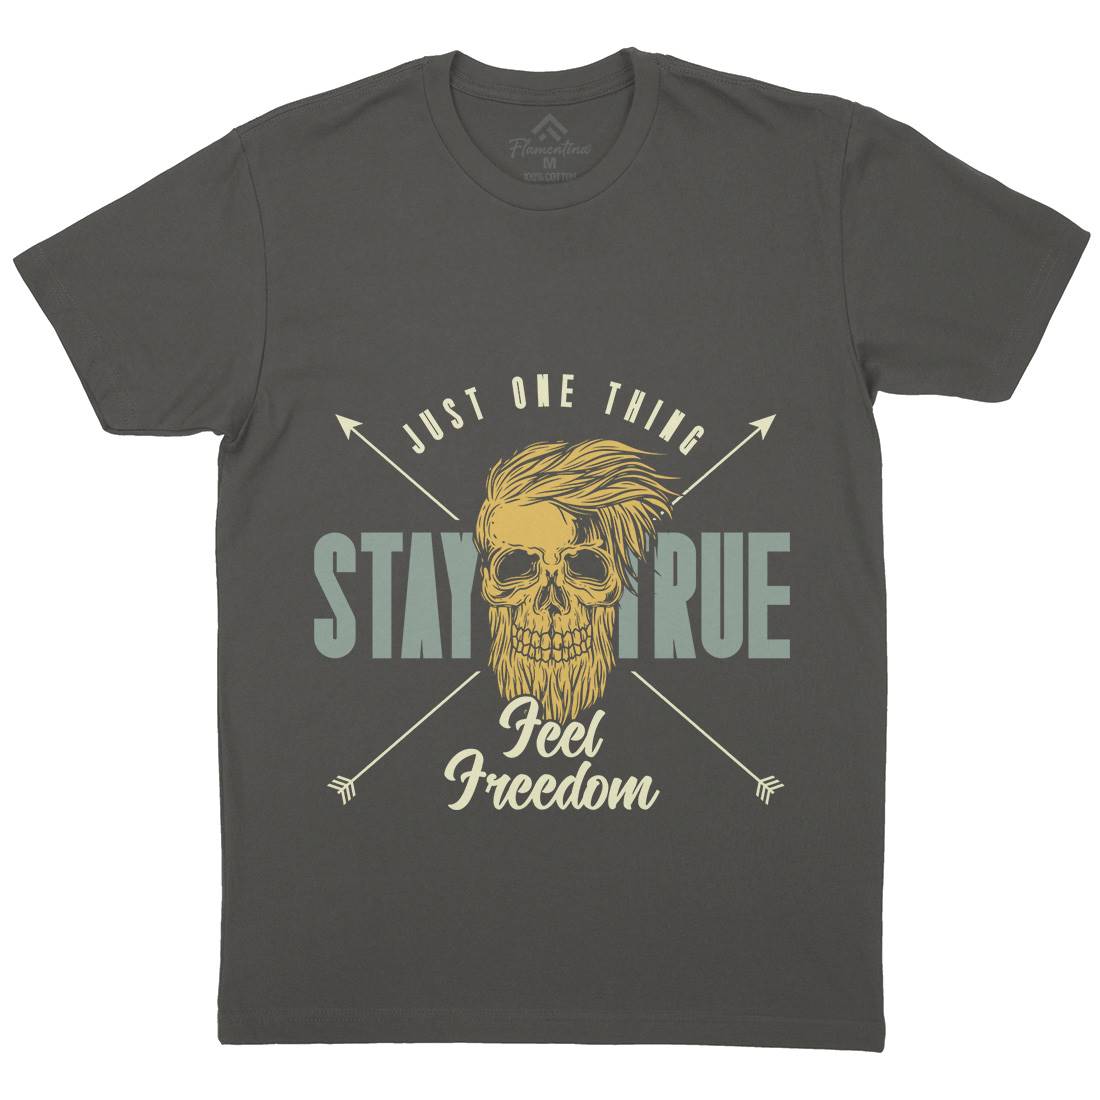 Stay True Mens Crew Neck T-Shirt Barber C851